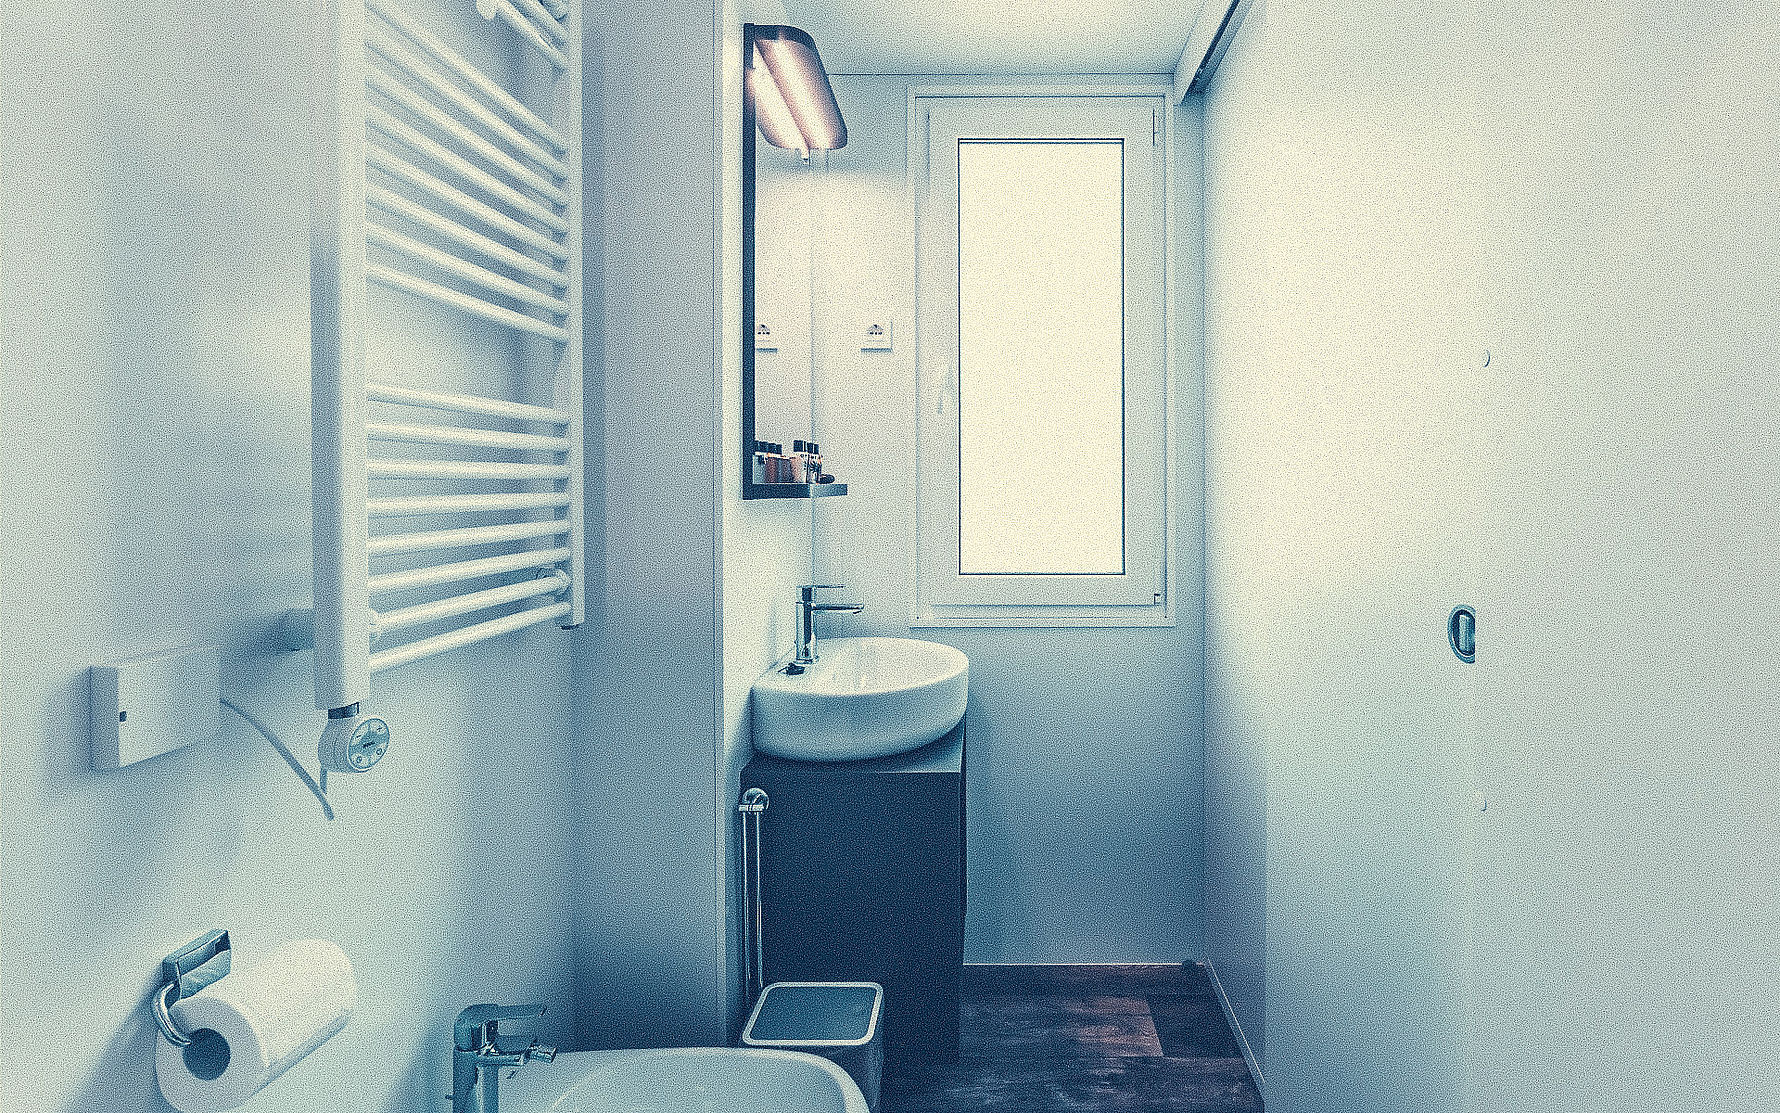 Bathroom with window and radiator